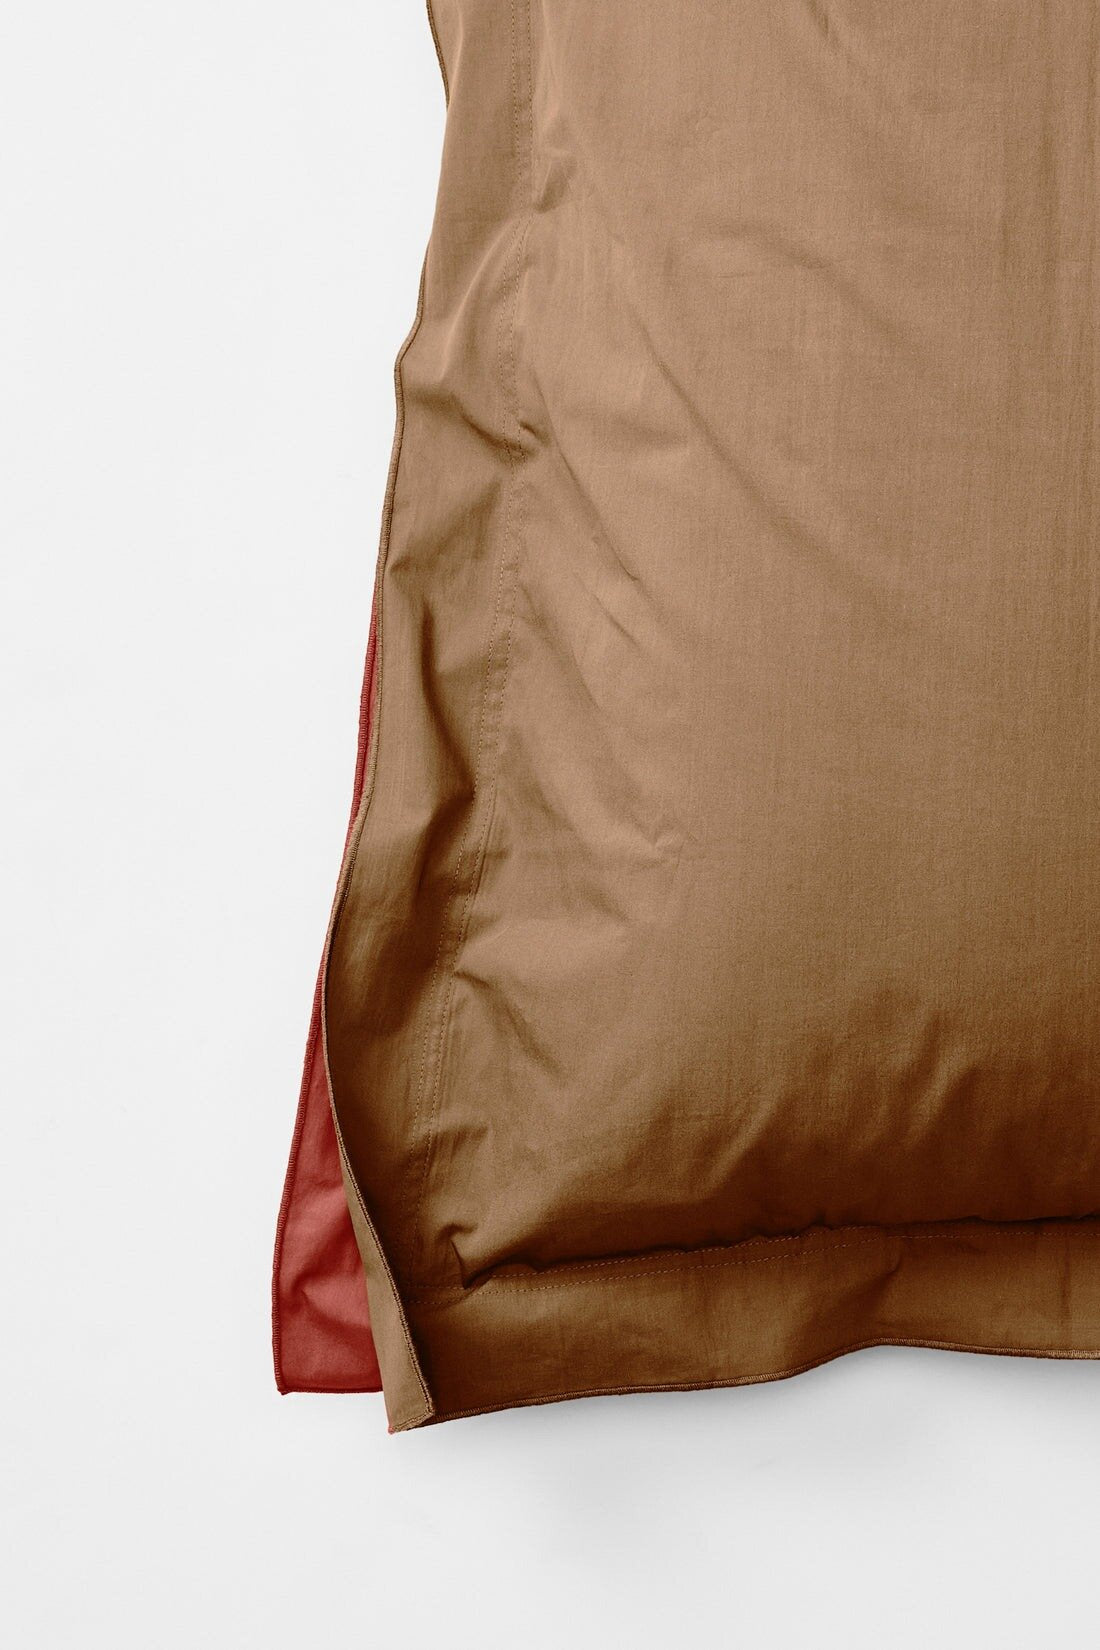 Bi Colour Organic Cotton Percale Pillow Pair - Carob & Ochre Red Pillows in Standard Pillow